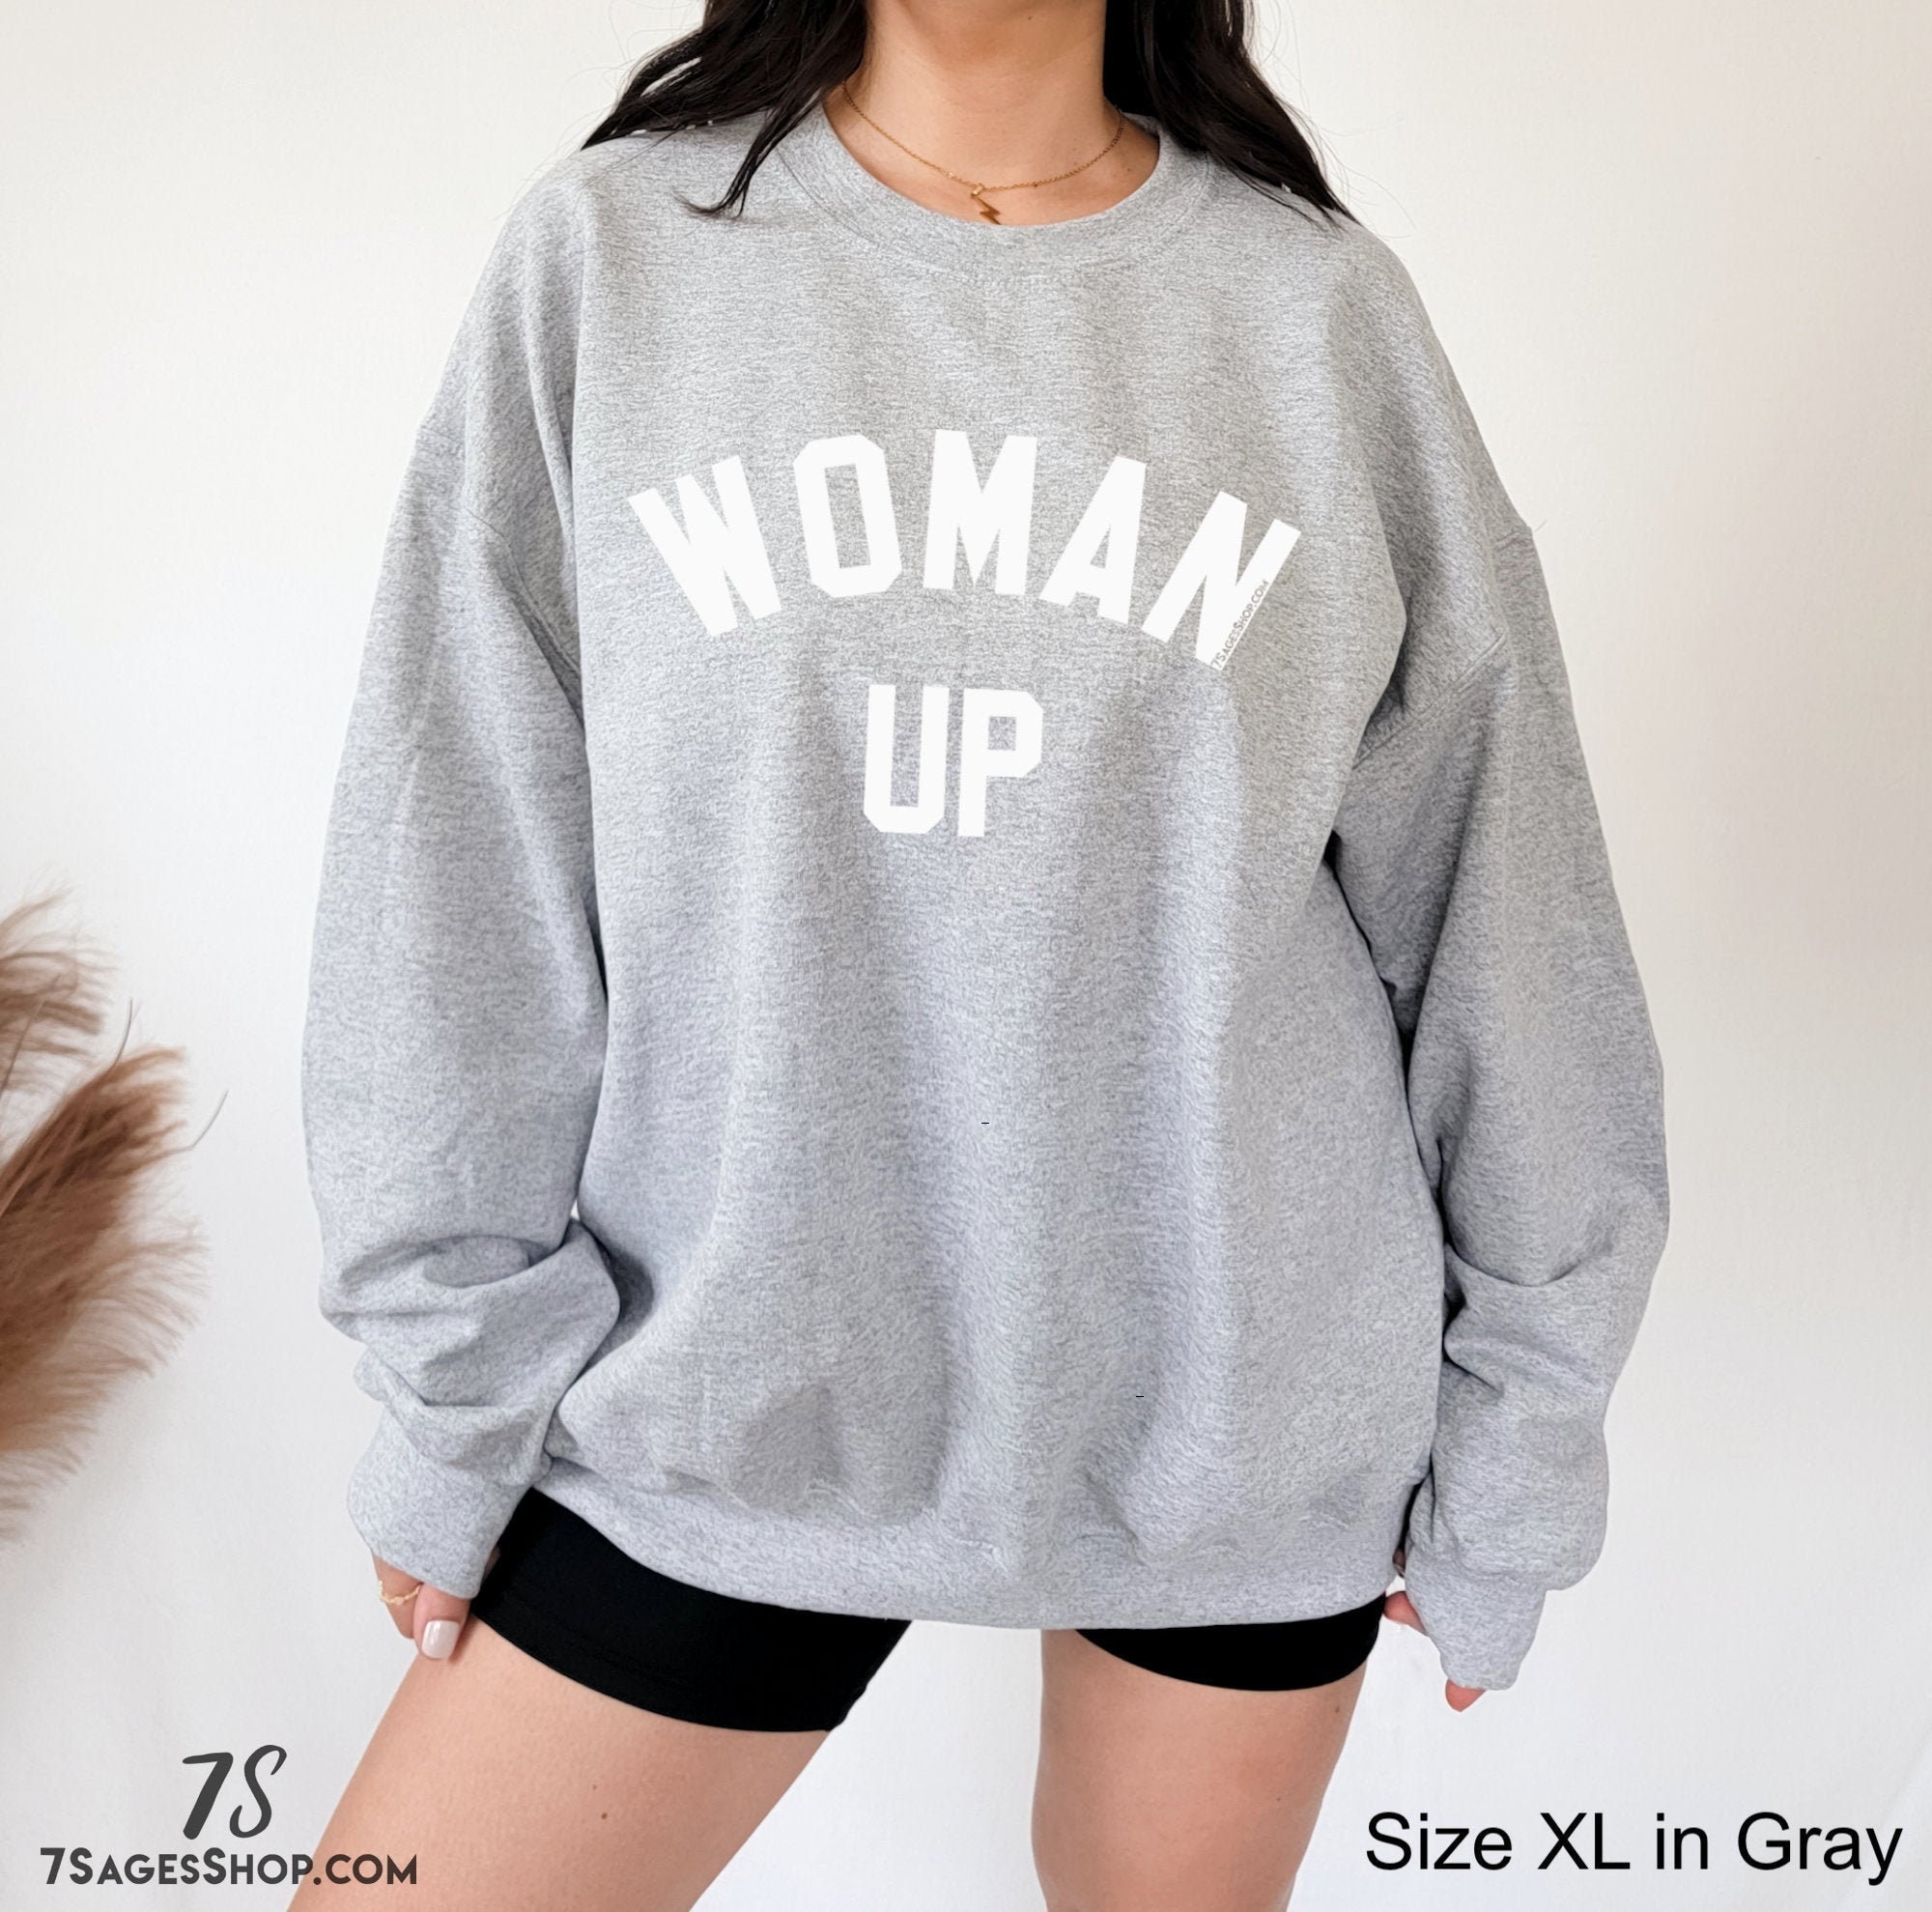 WOMEN EMPOWER SHIRT Rude Shirt Funny Feminism Crew Neck Girl Power Shirt Printed Equal Rights Short Sleeve Tee